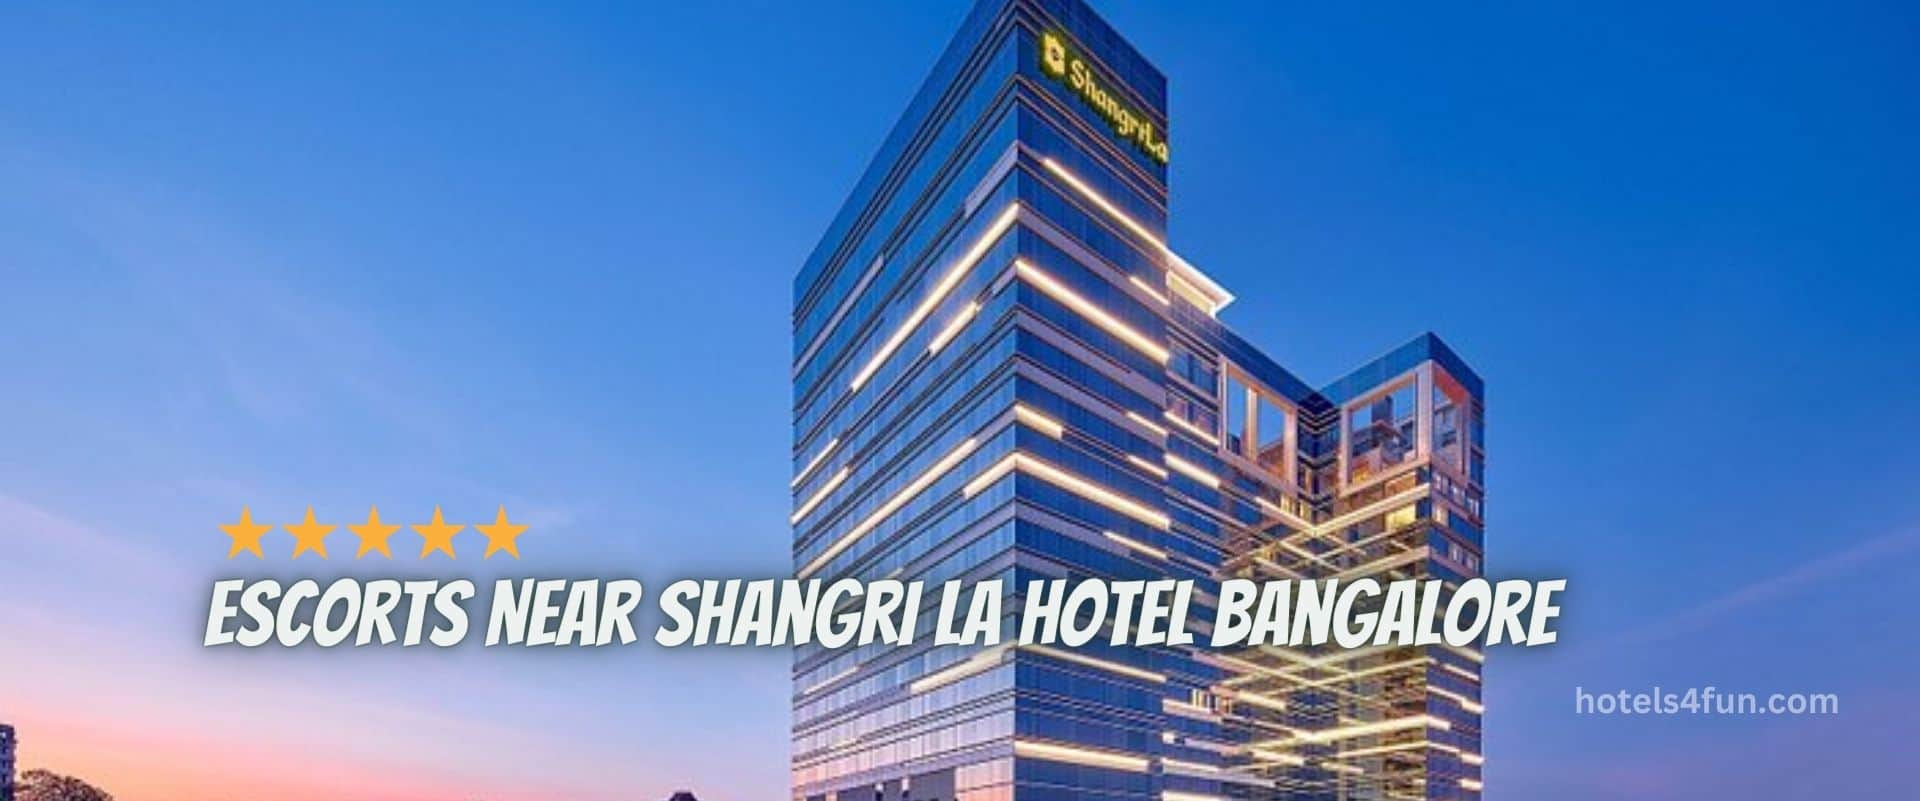 Shangri La Hotel Bangalore